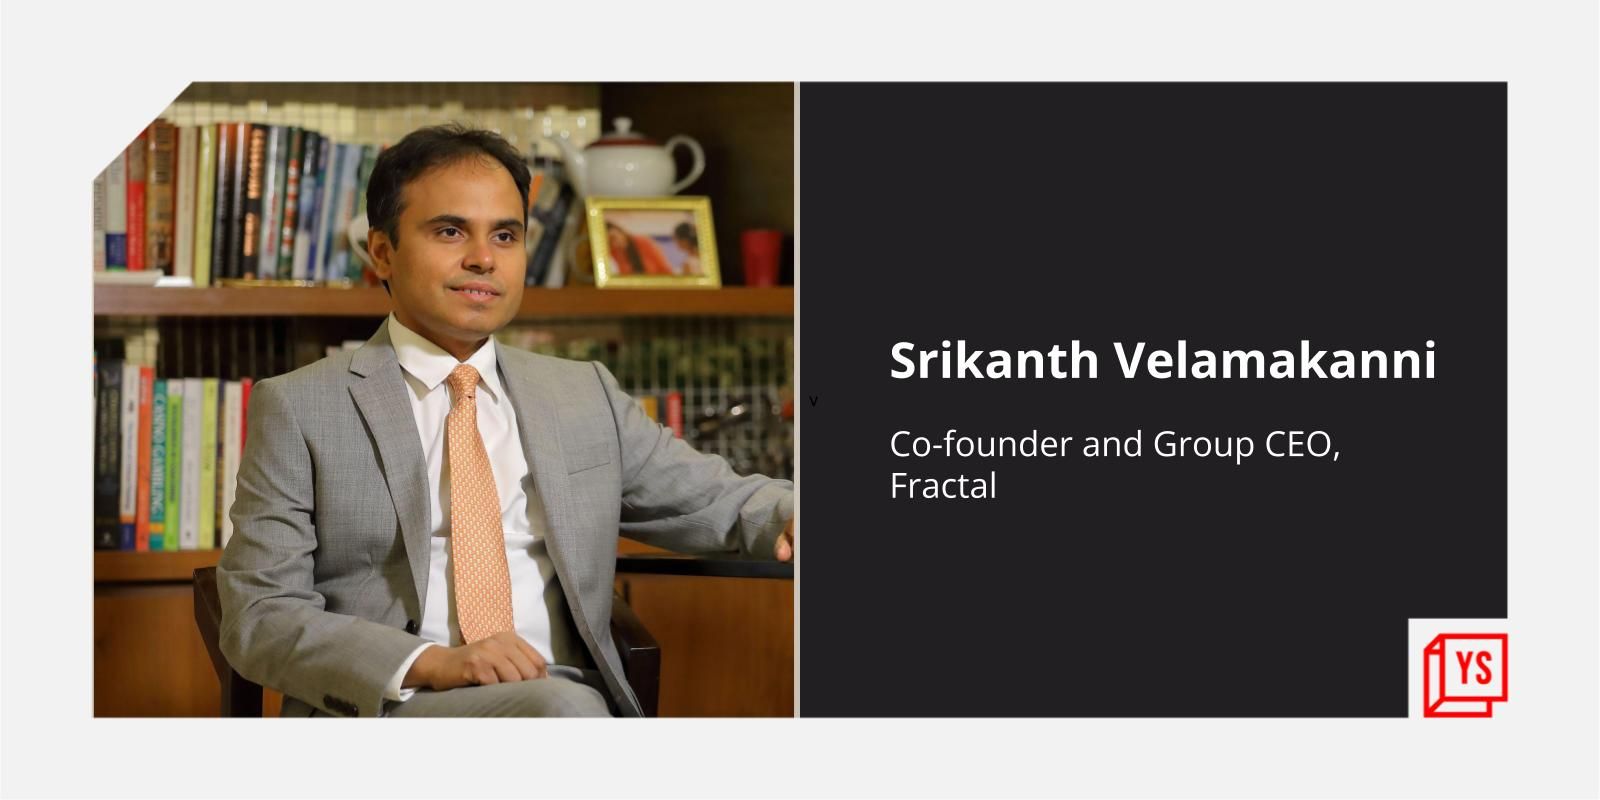 Srikanth Velamakanni, Fractal